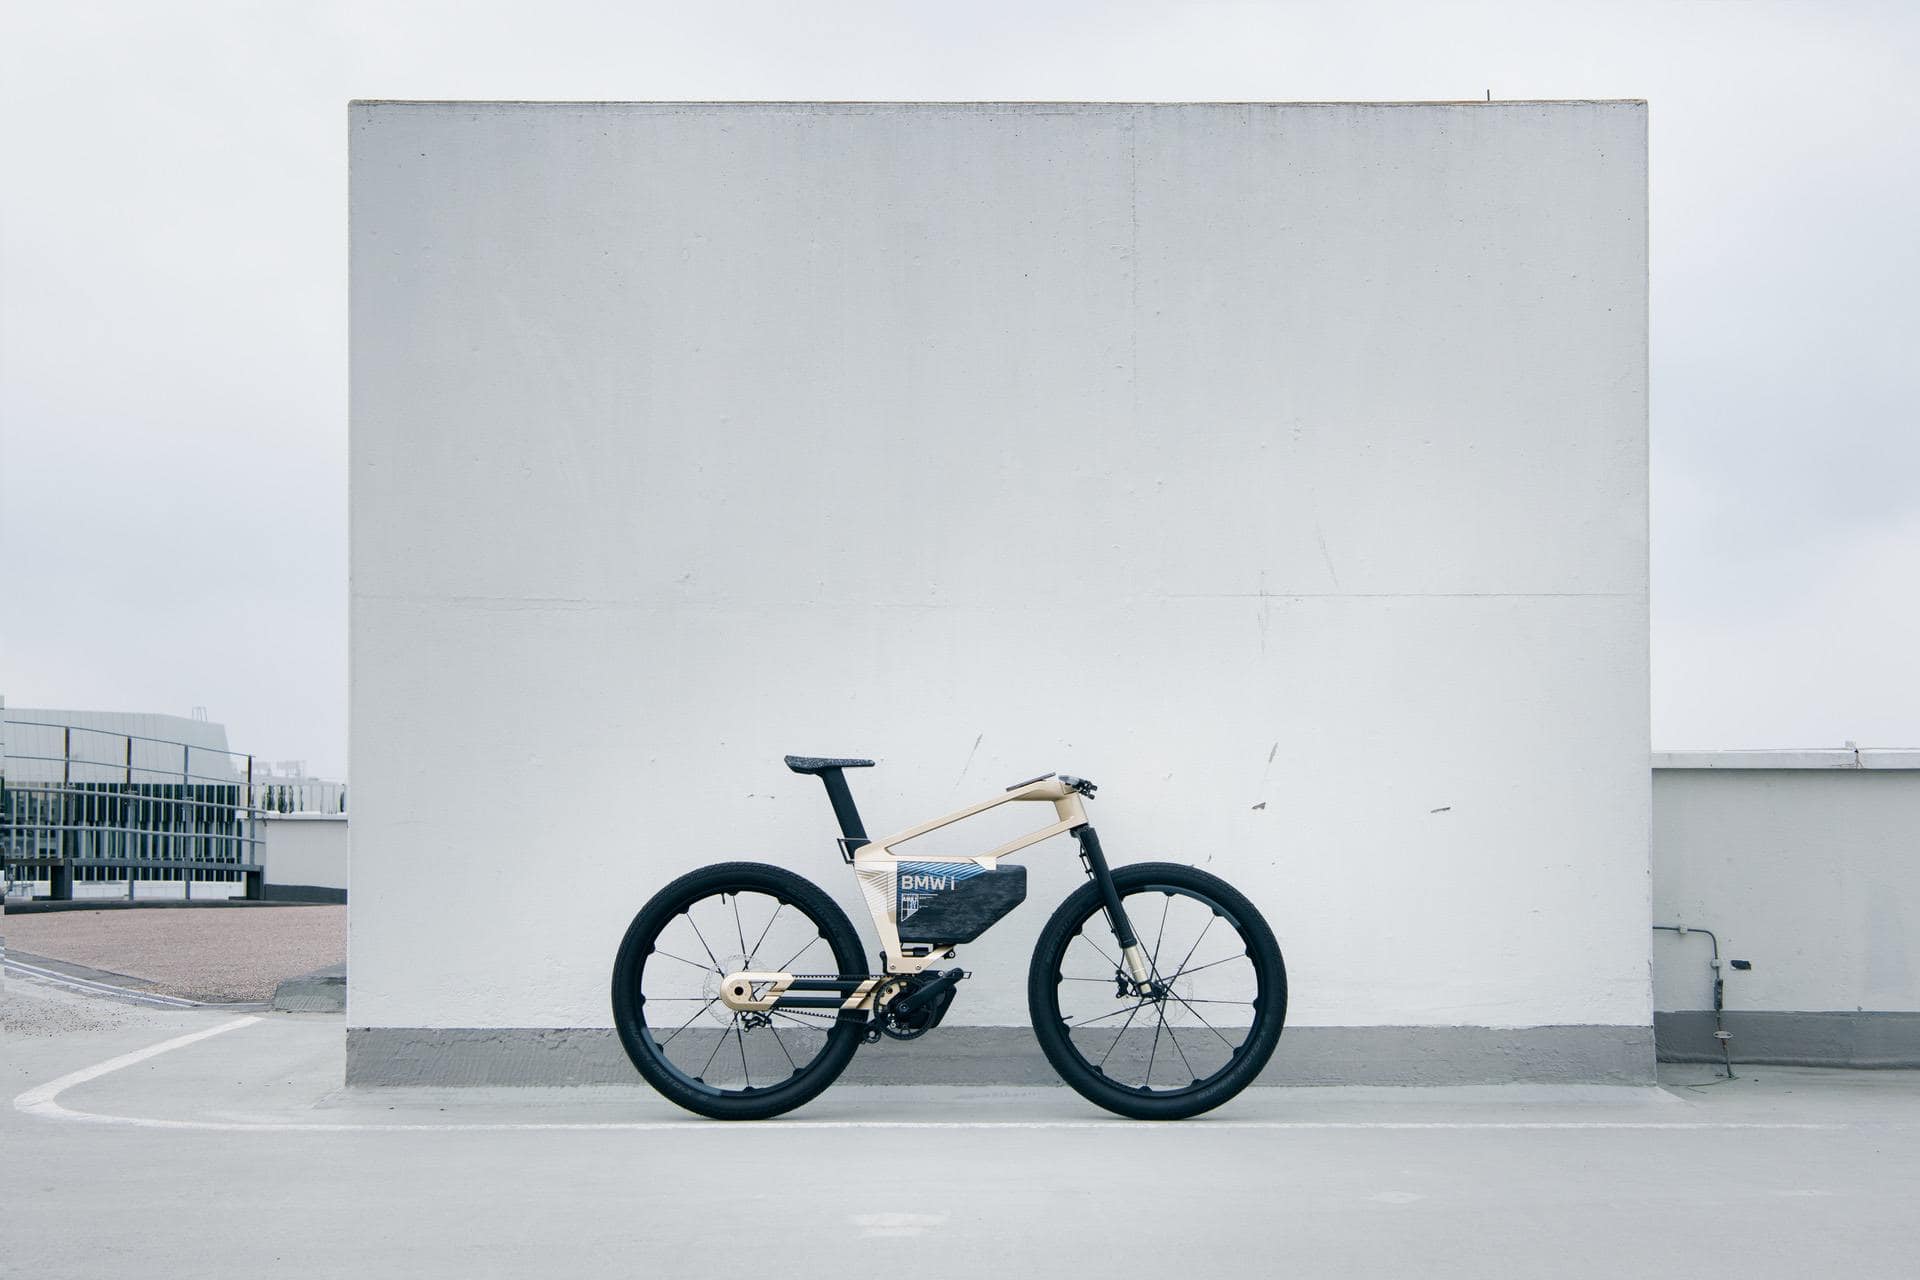 BMW electric bike